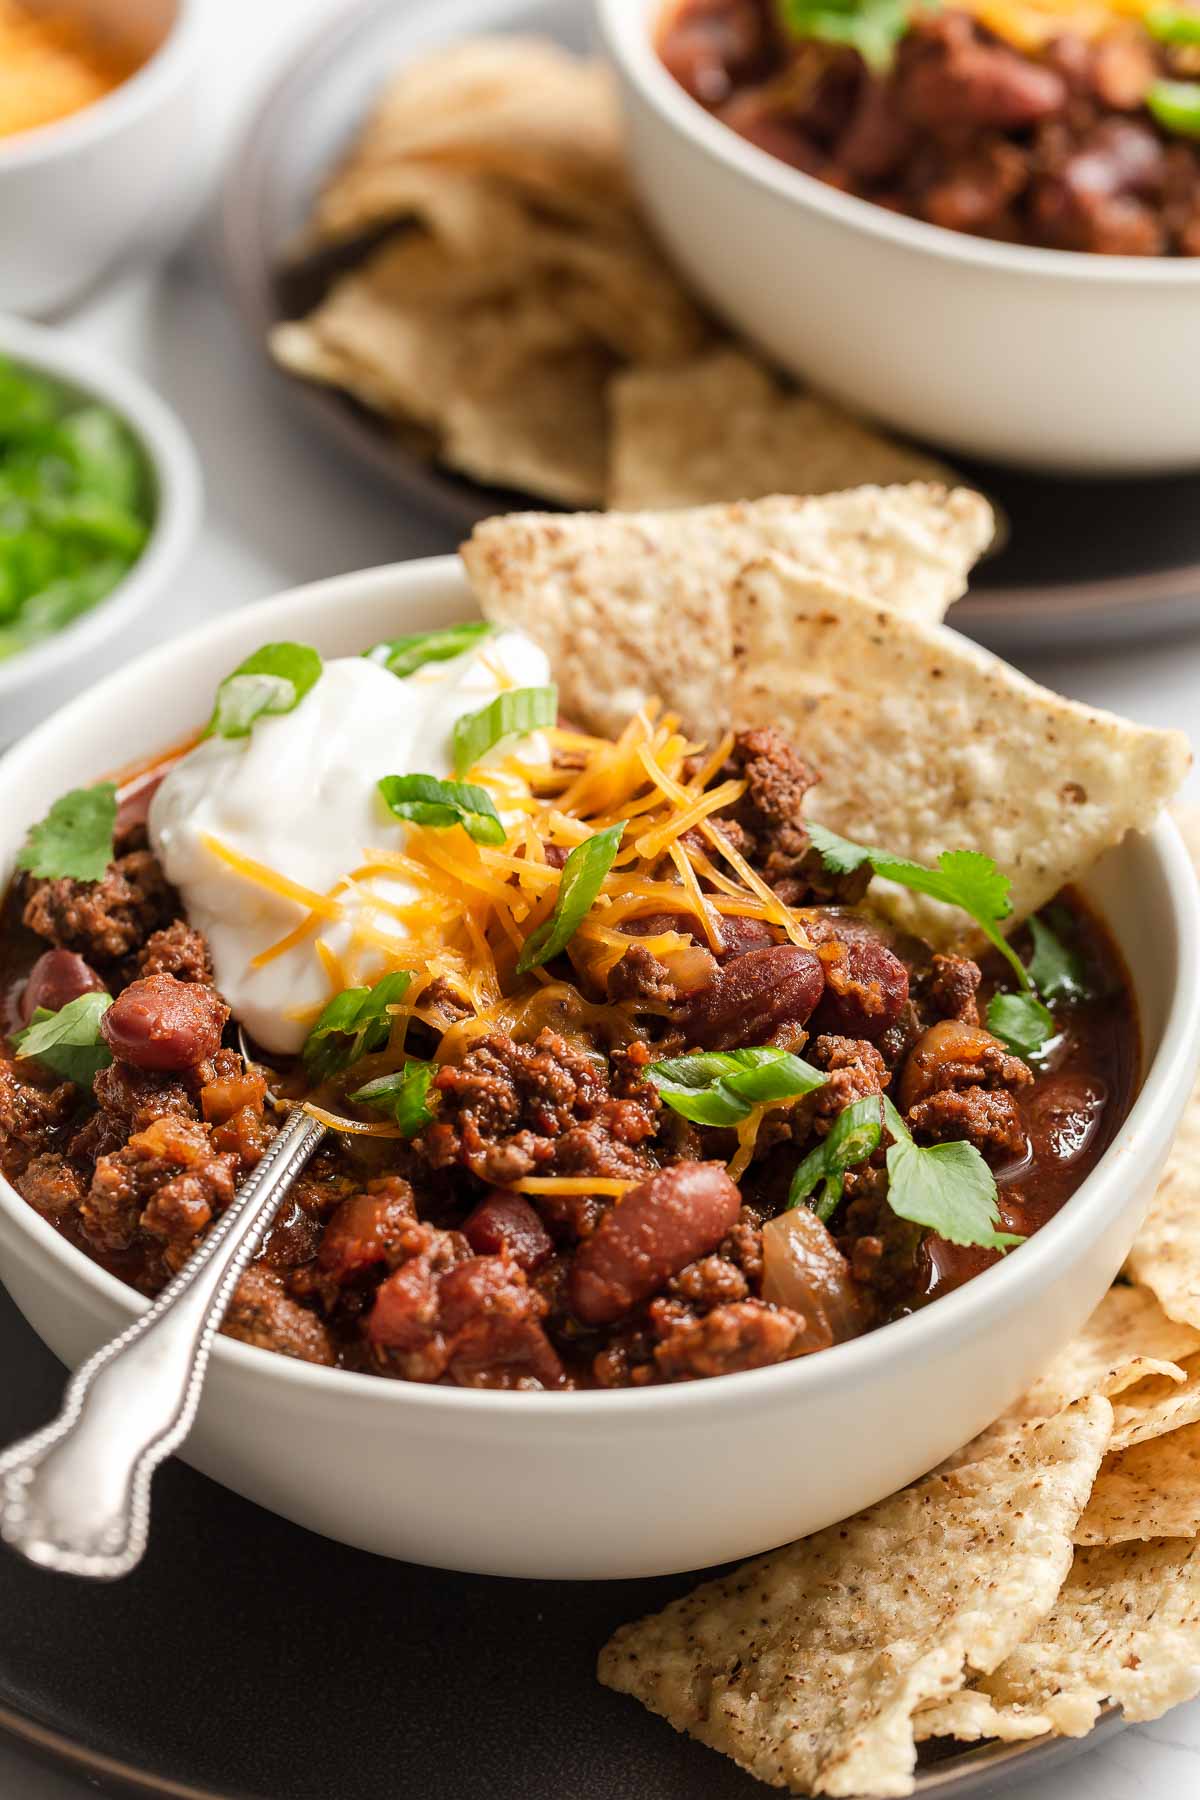 https://beanrecipes.com/wp-content/uploads/2022/02/Crockpot-Chili-with-Beans-8.jpg